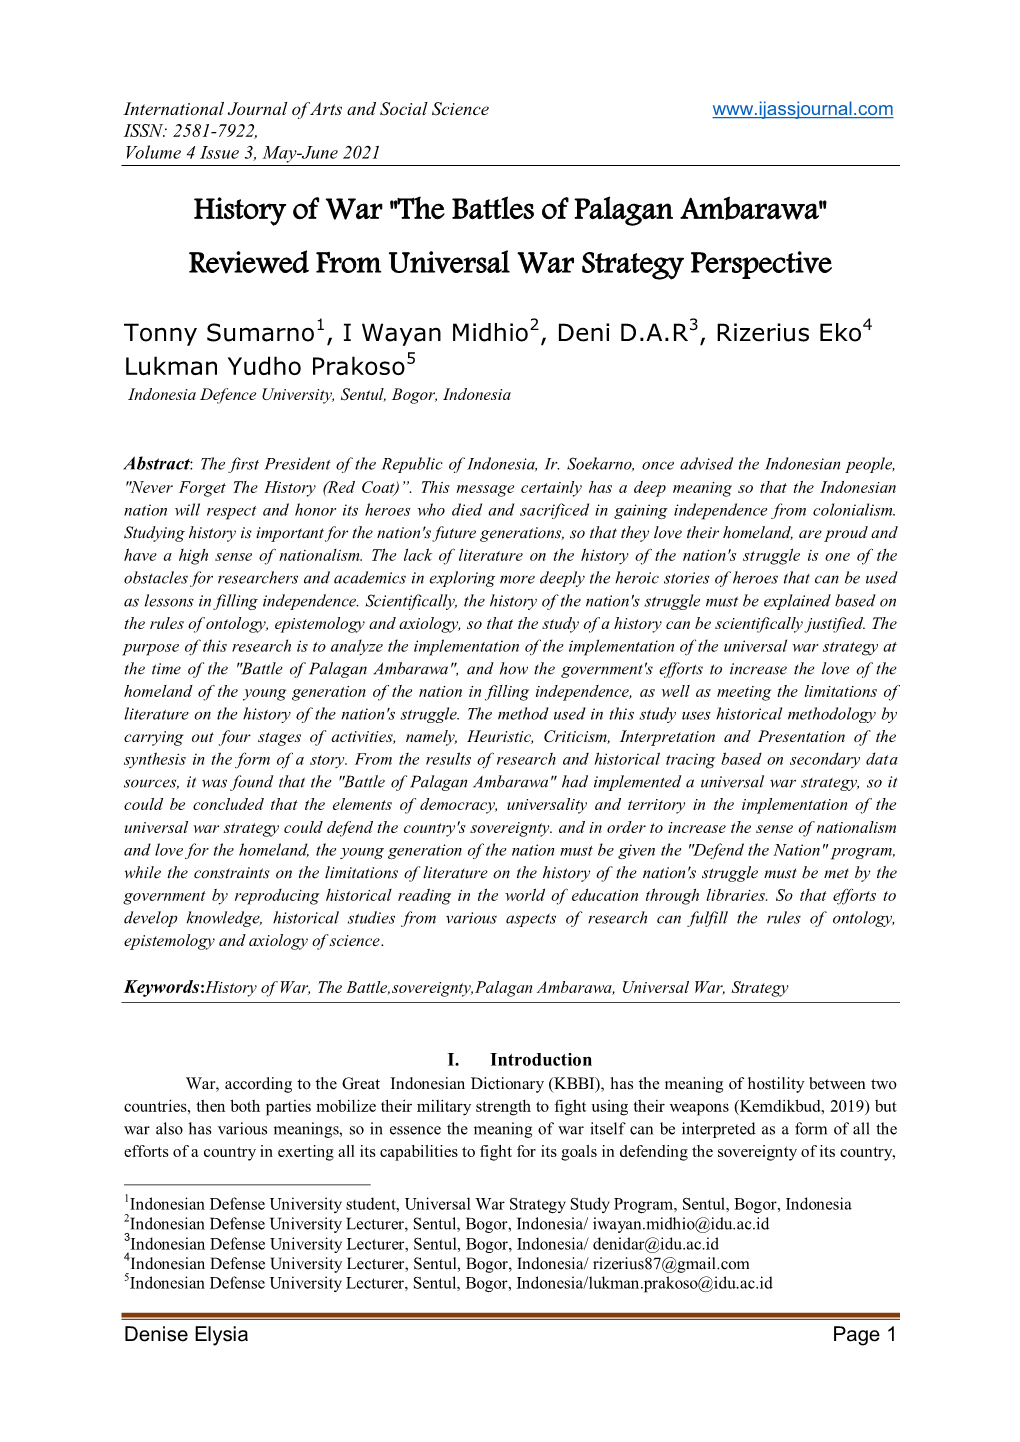 The Battles of Palagan Ambarawa" Reviewed from Universal War Strategy Perspective